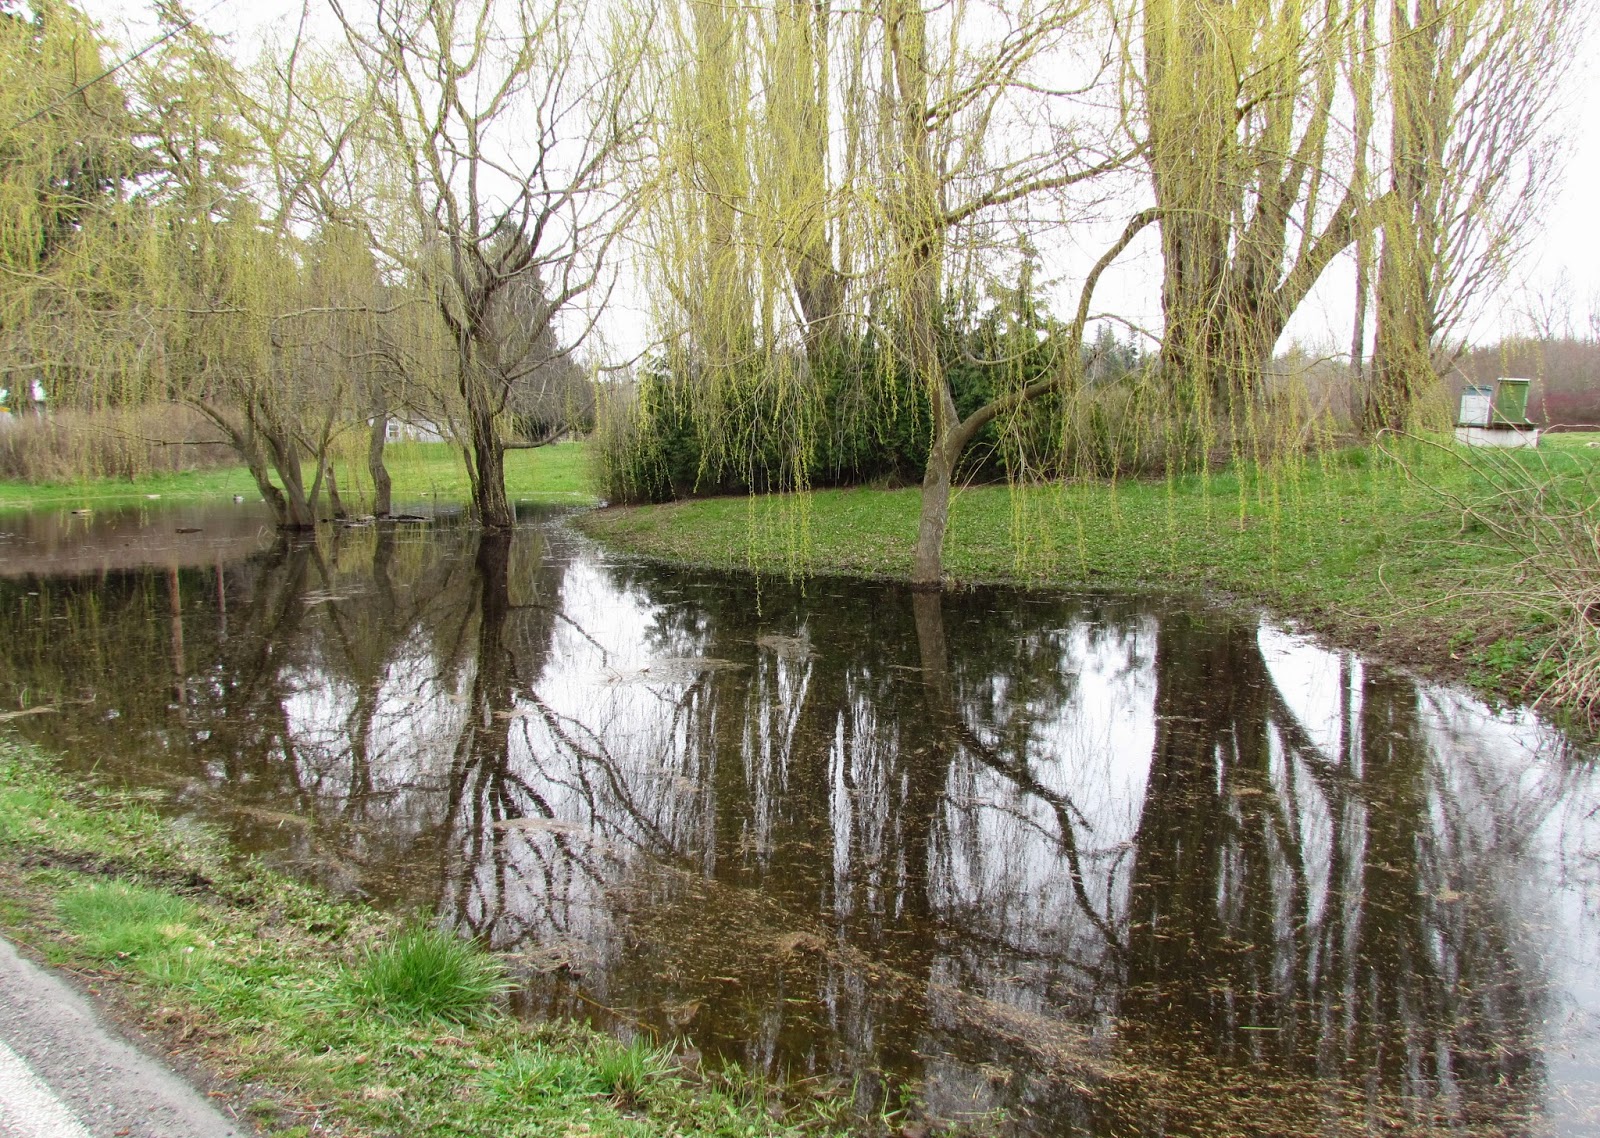 Scene Through My Eyes: Rurality - Reflections in a Seasonal Pond